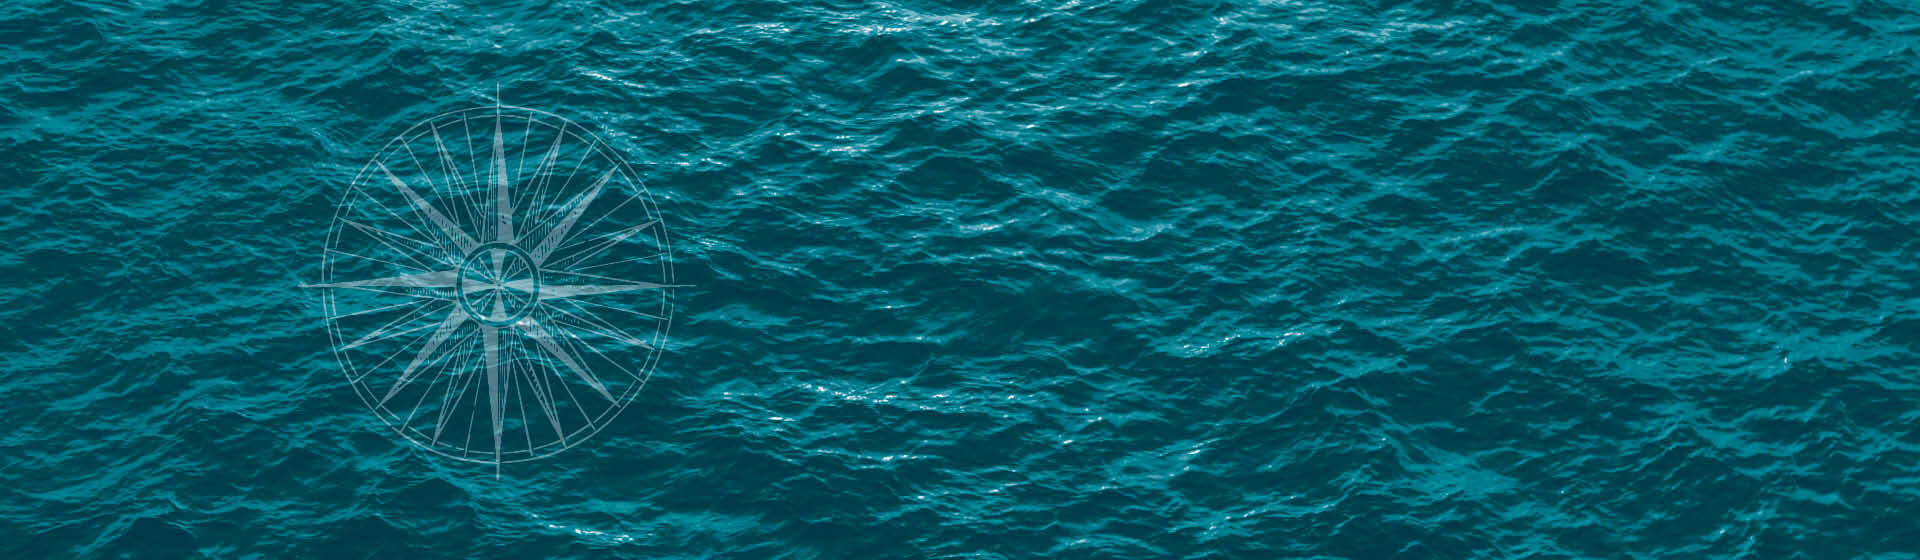 blaues Meer mit Kompassrose